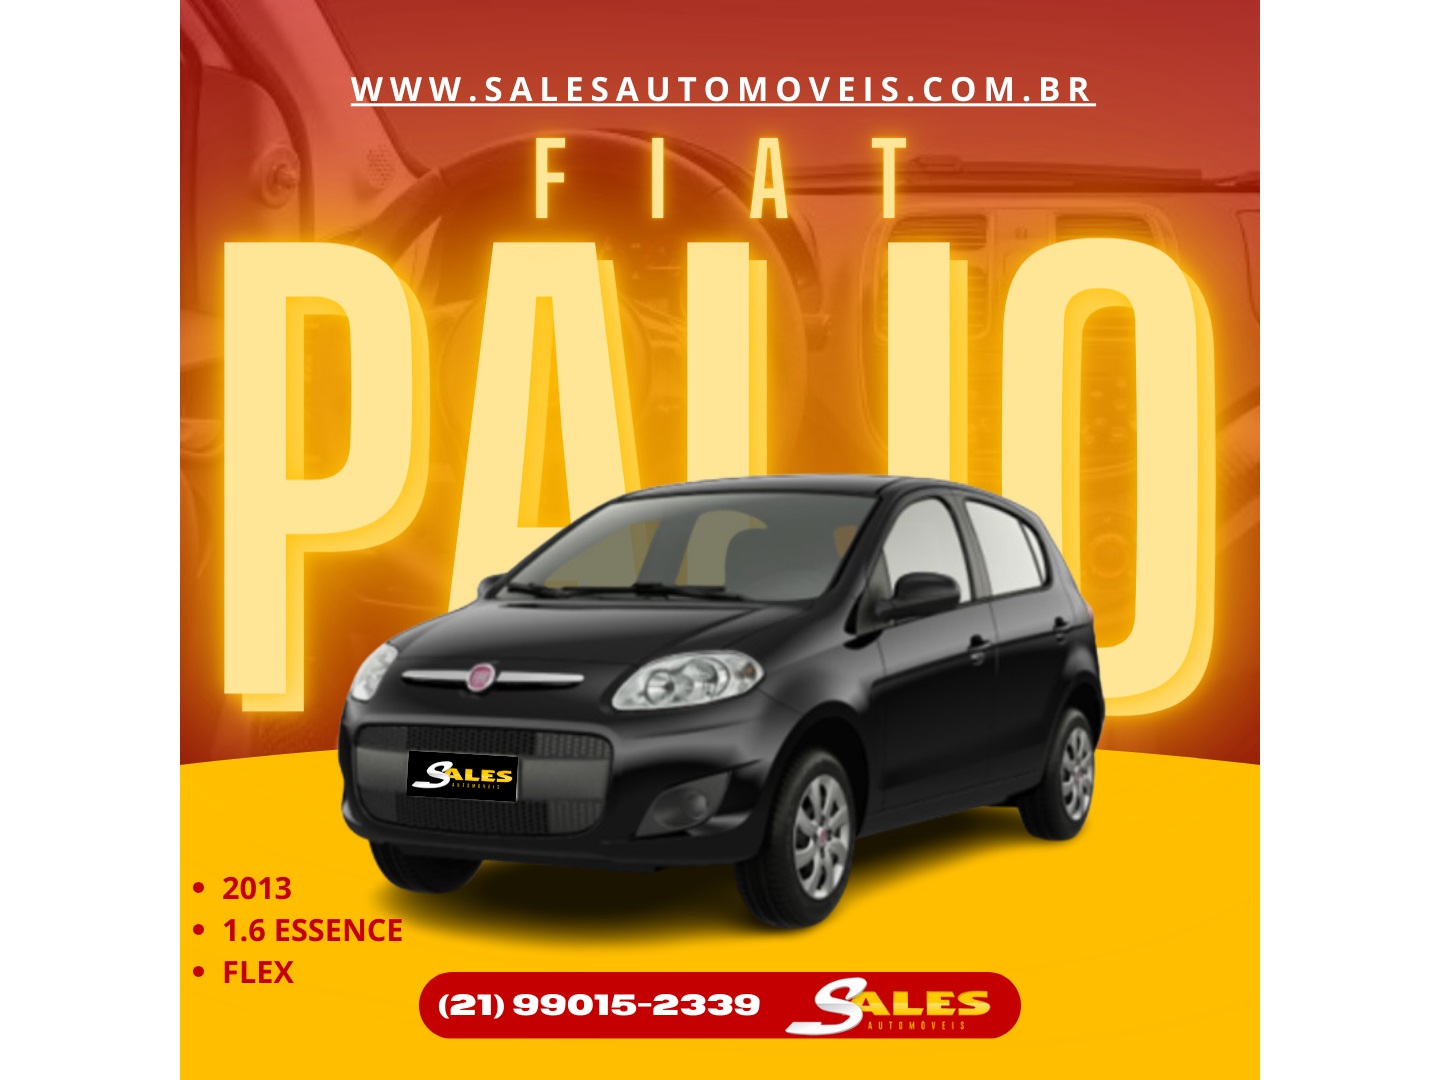 FIAT PALIO 1.6 MPI ESSENCE 16V FLEX 4P MANUAL